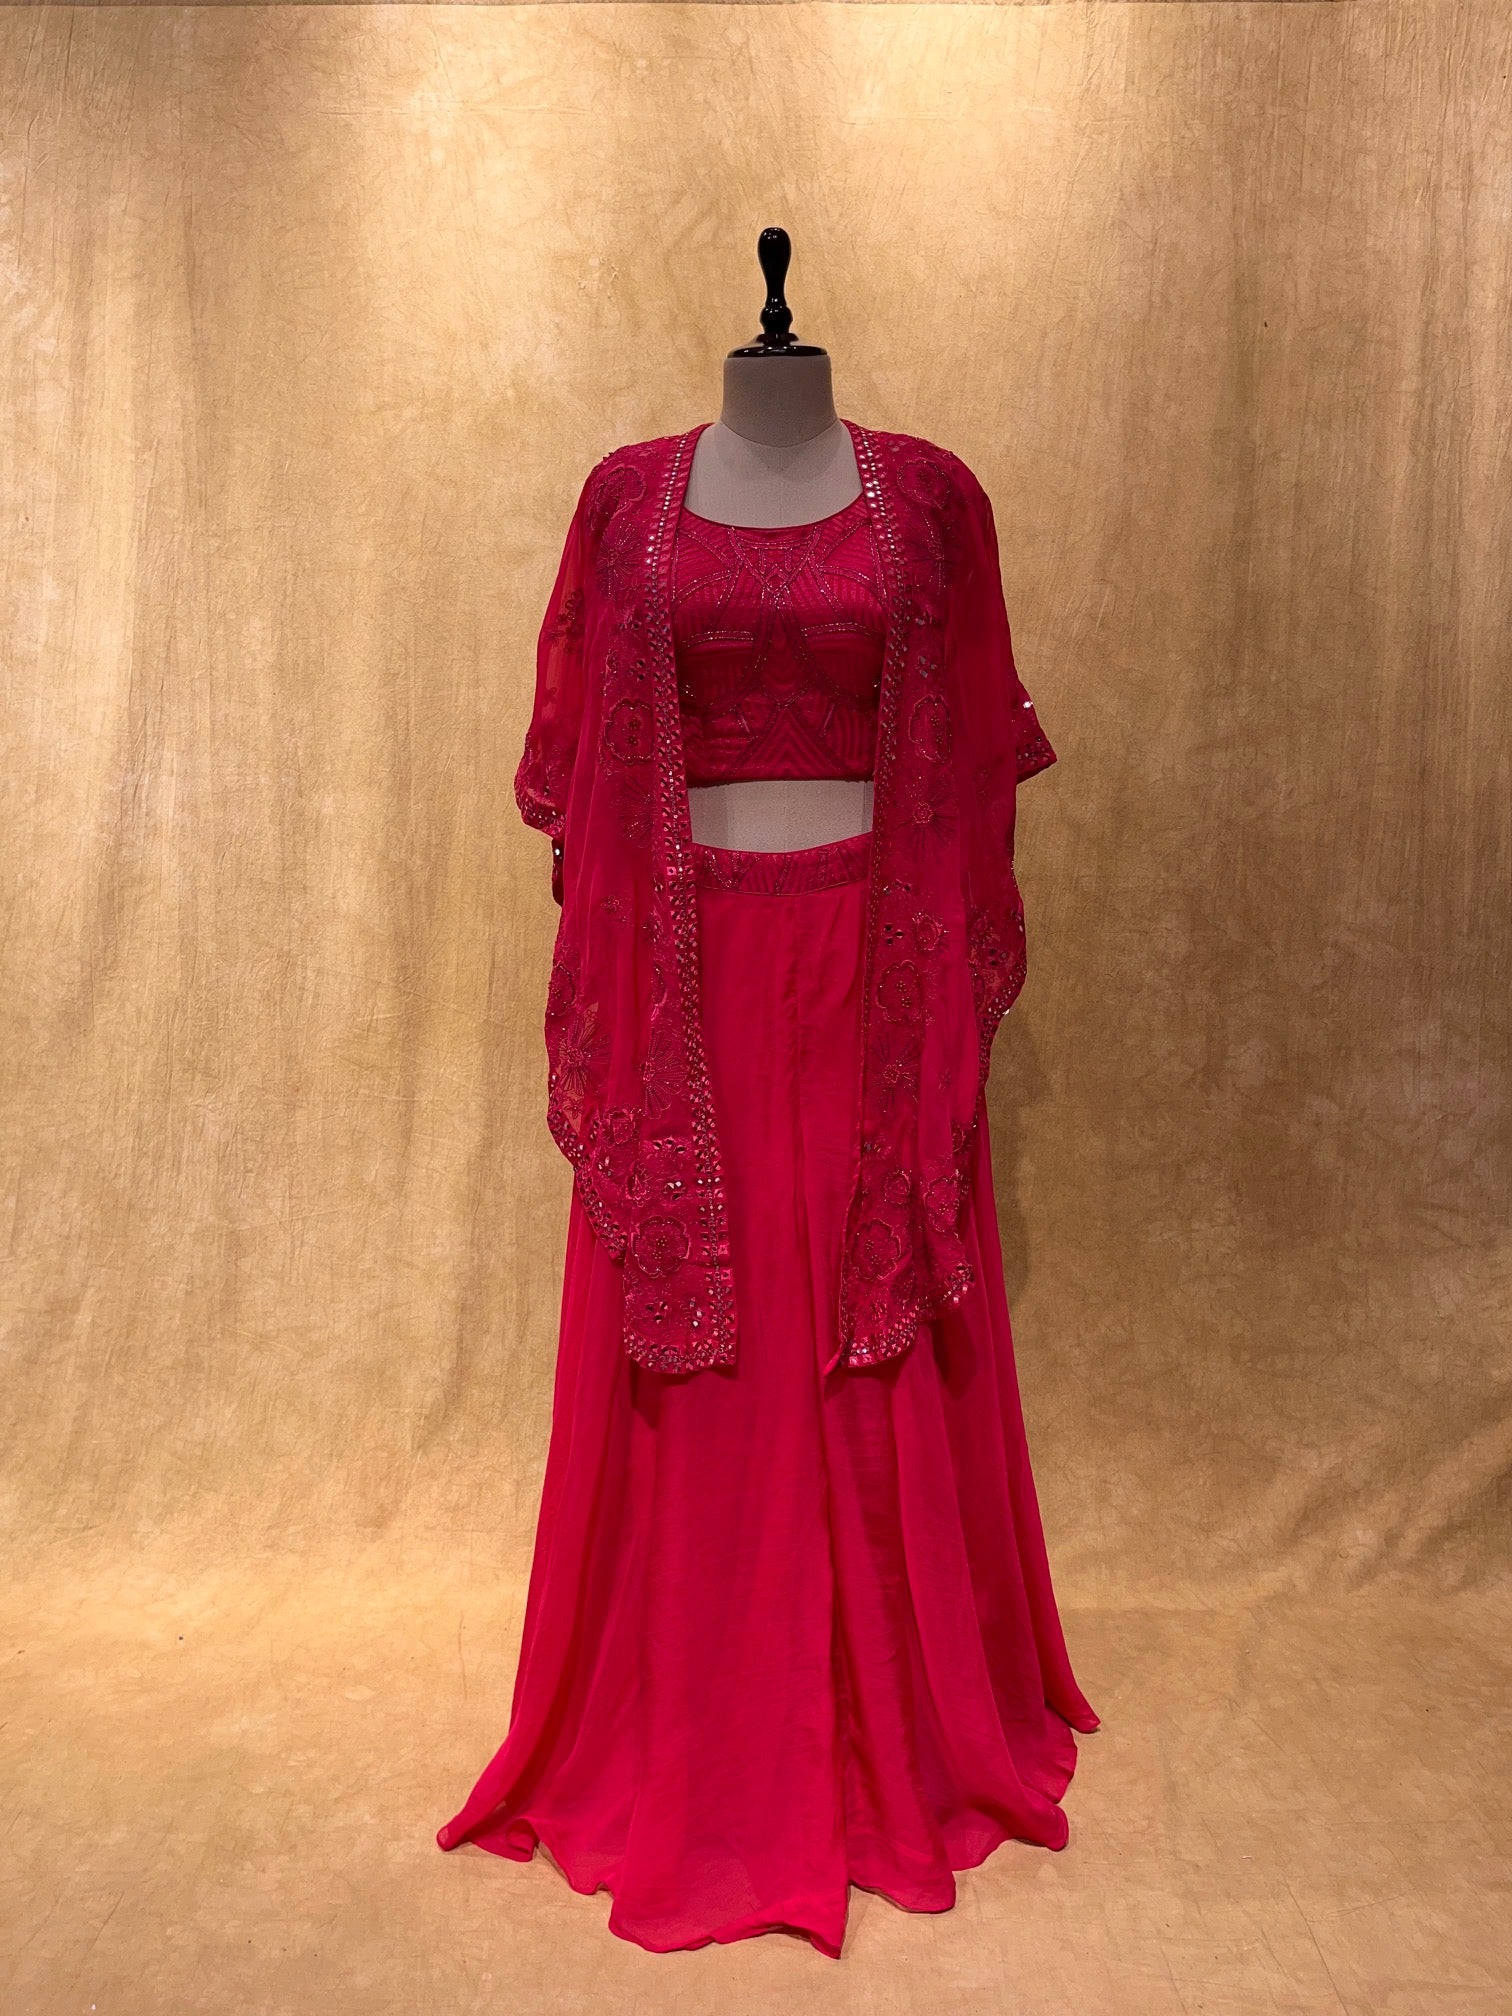 Light Pink Wedding Wear Indo Western Sherwani at Rs 5200/piece in Mumbai |  ID: 21082613230